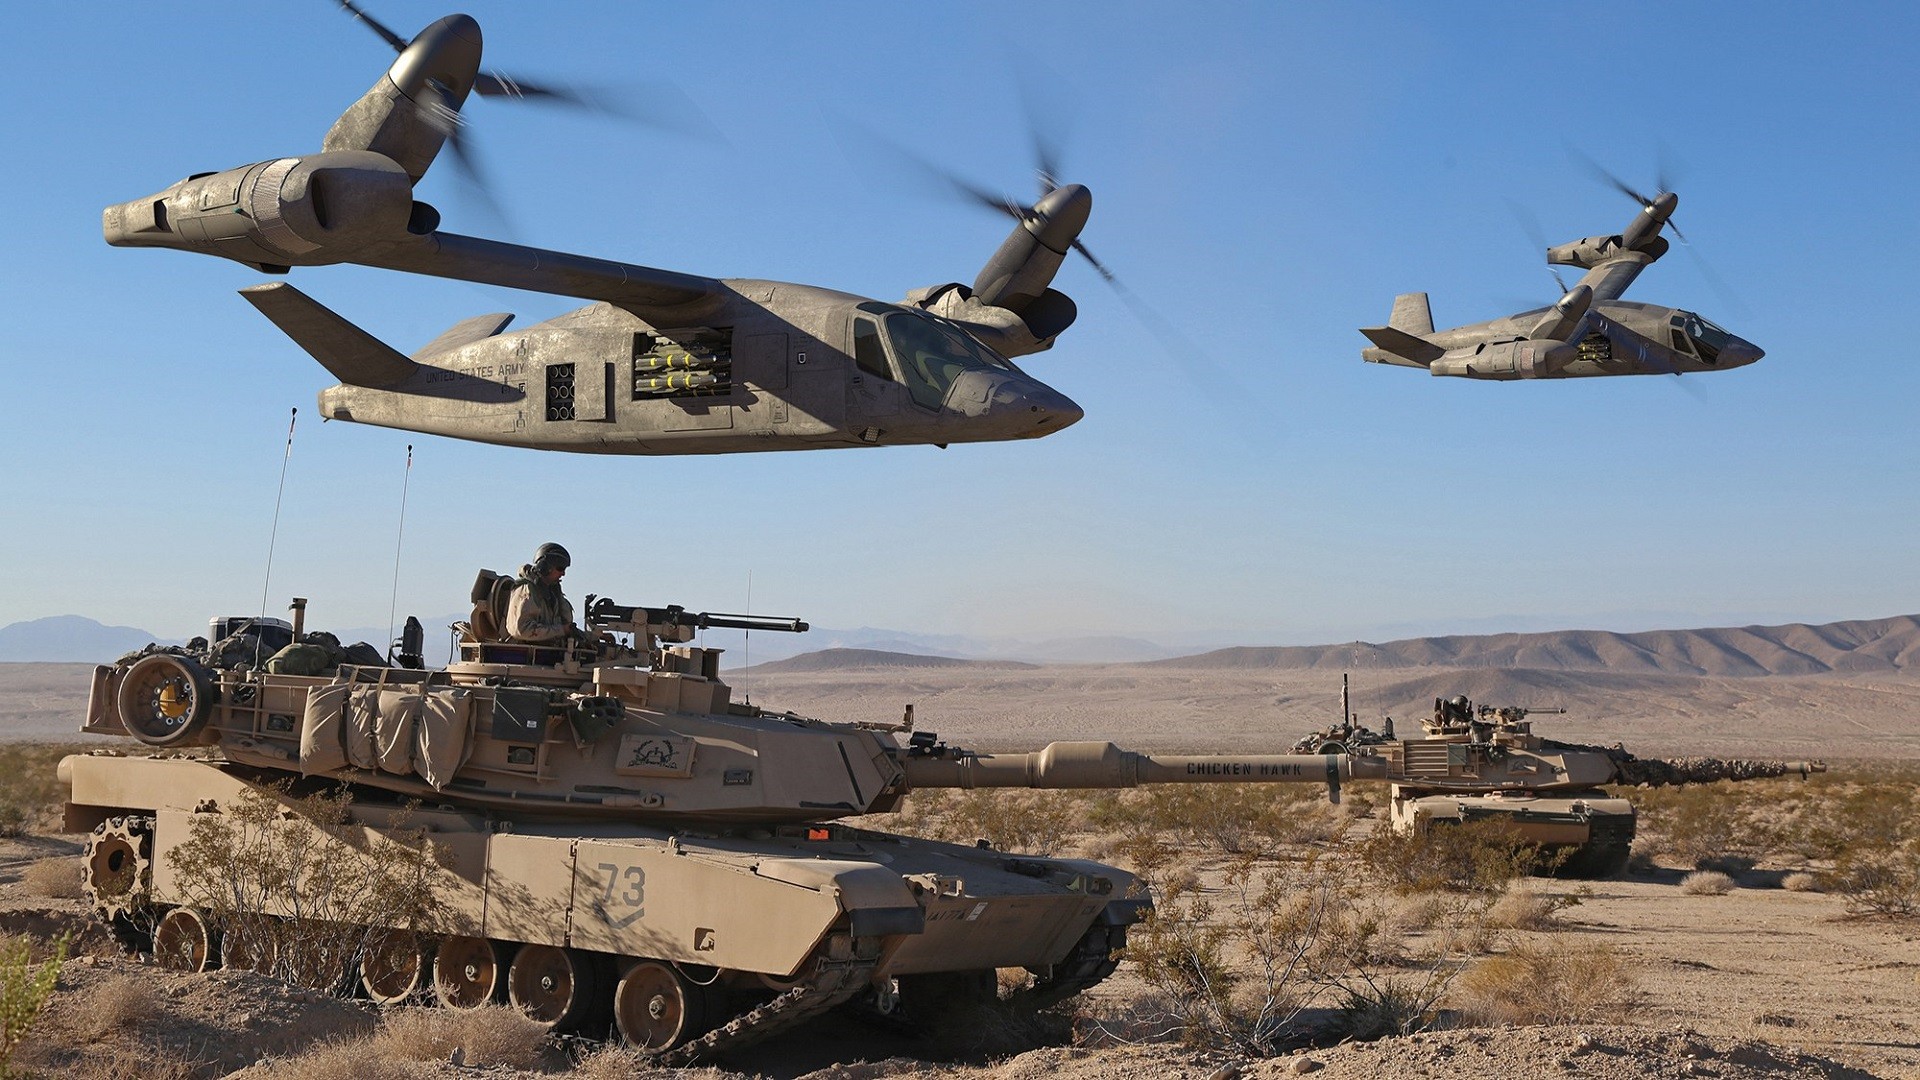 War machinery in the desert